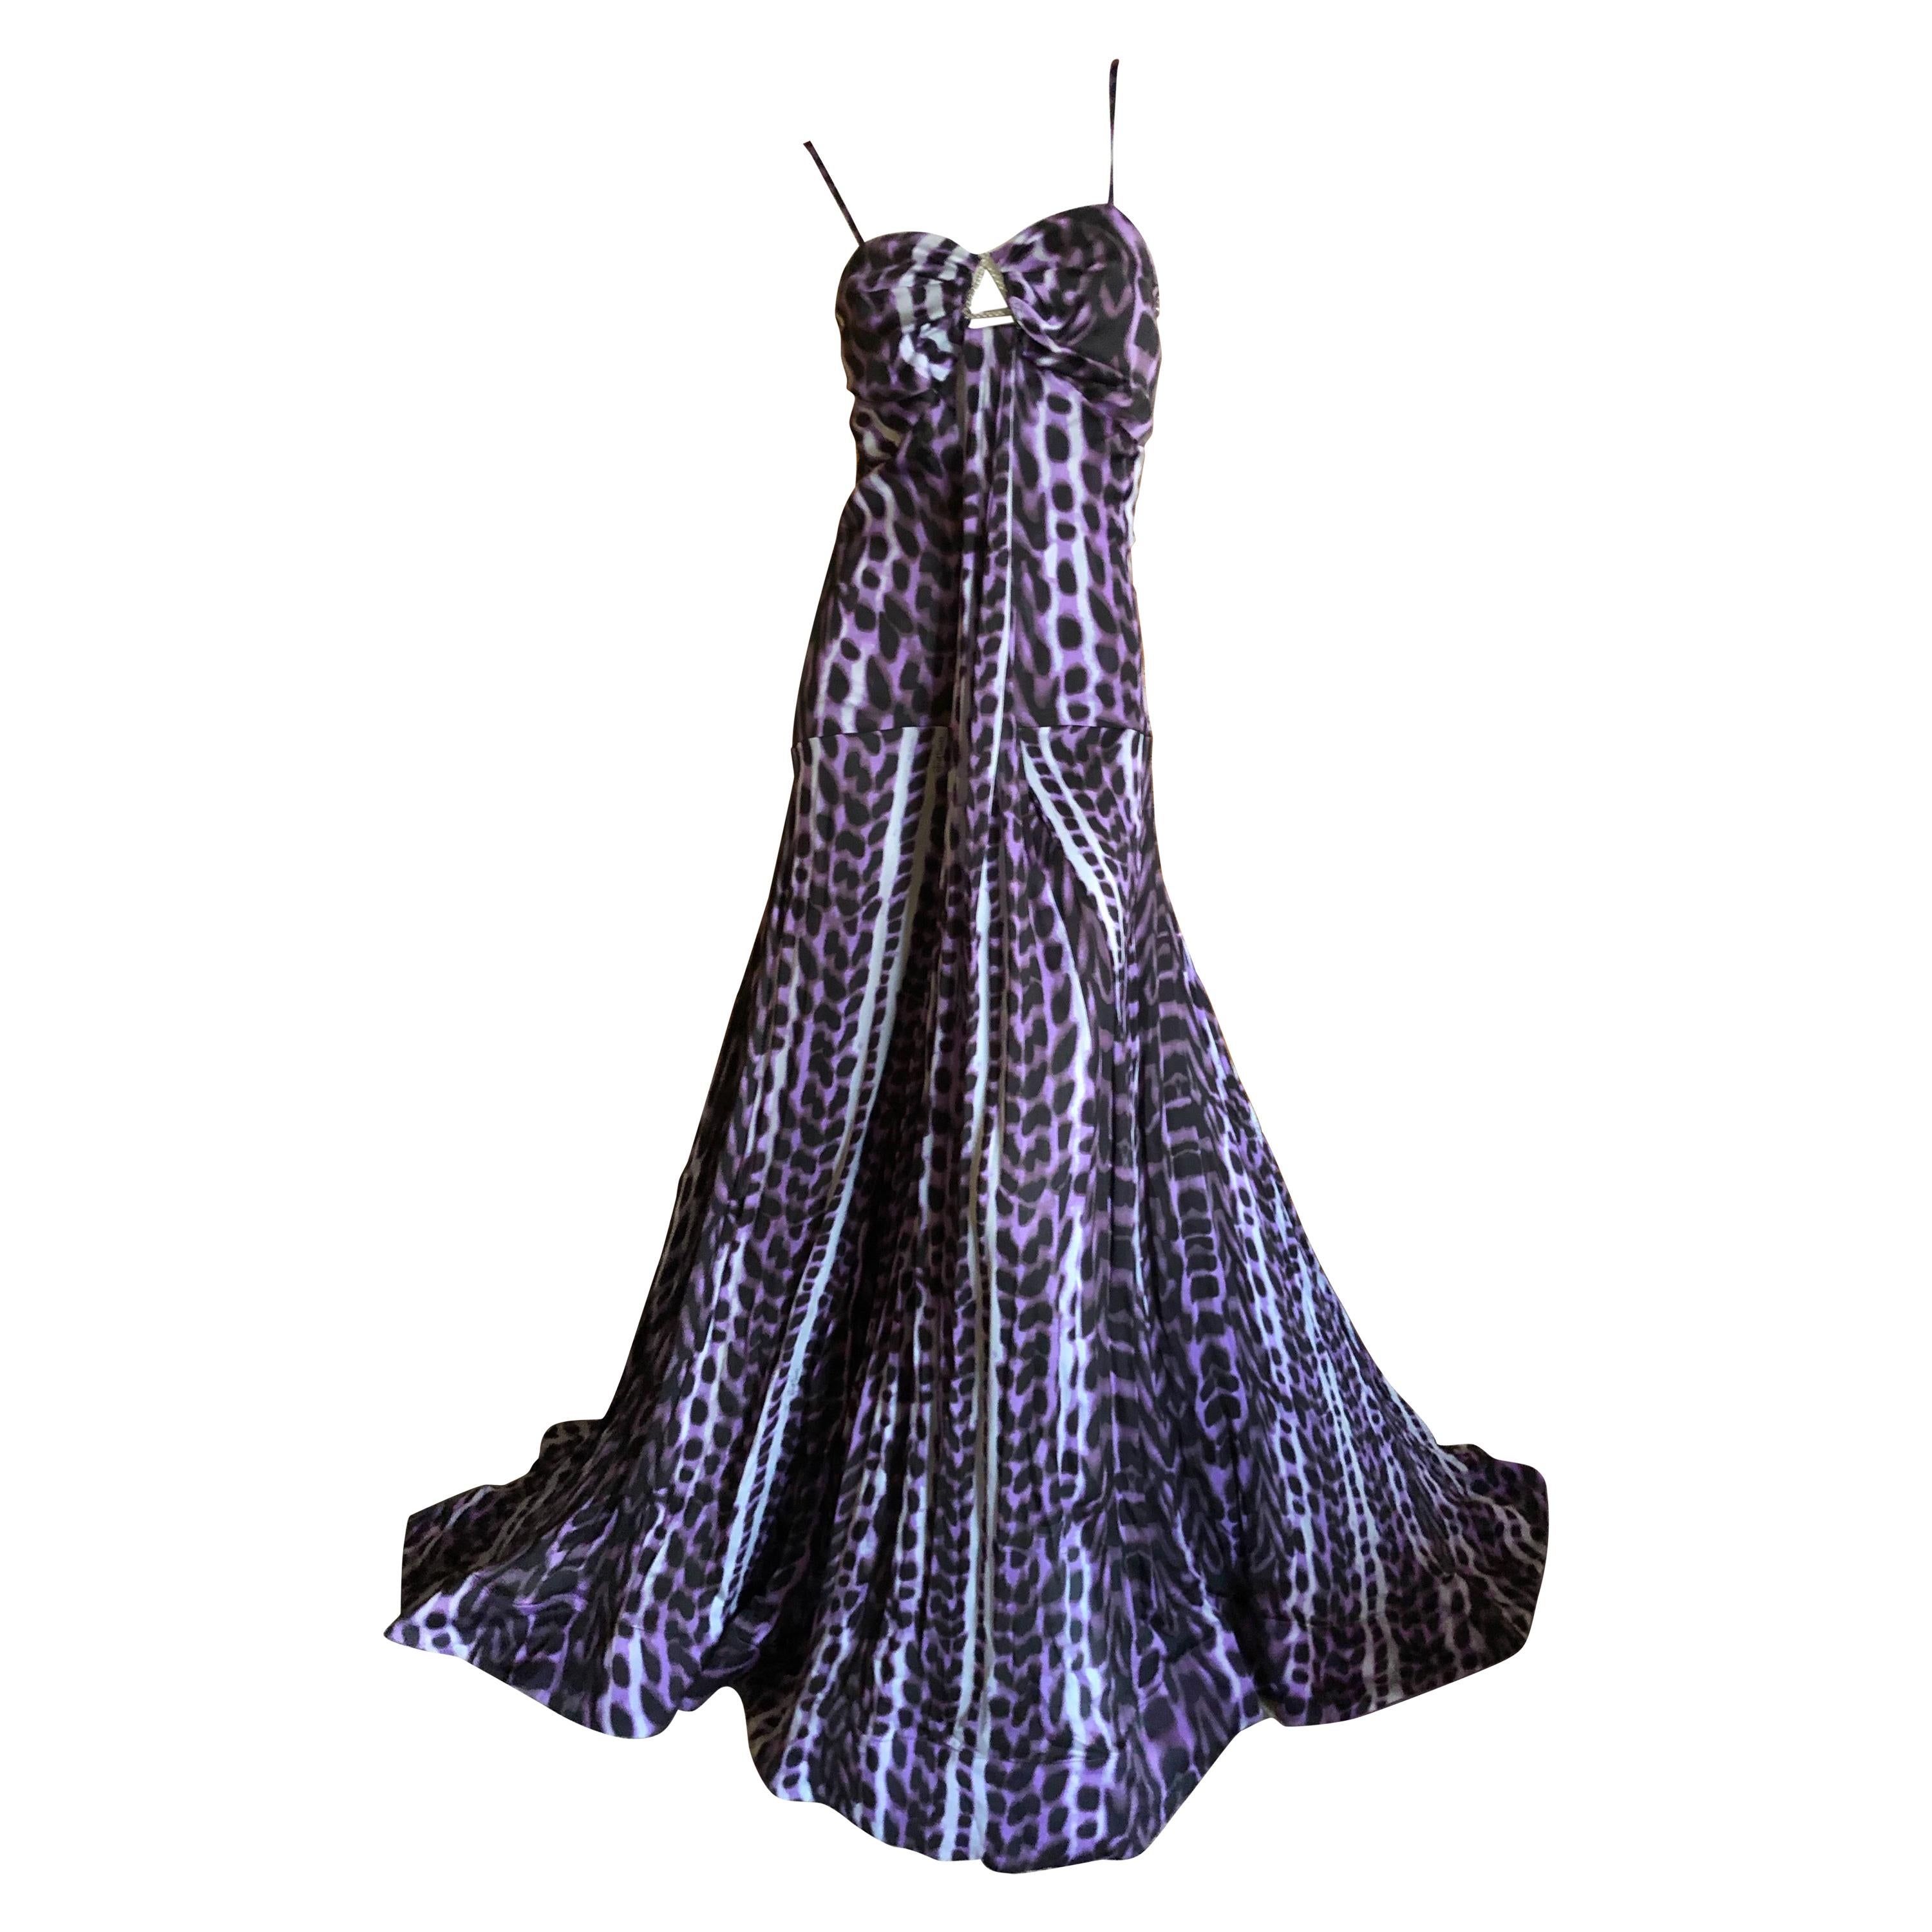  Roberto Cavalli Just Cavalli Leopard Print Silk Evening Gown Long Weighted Hem  For Sale